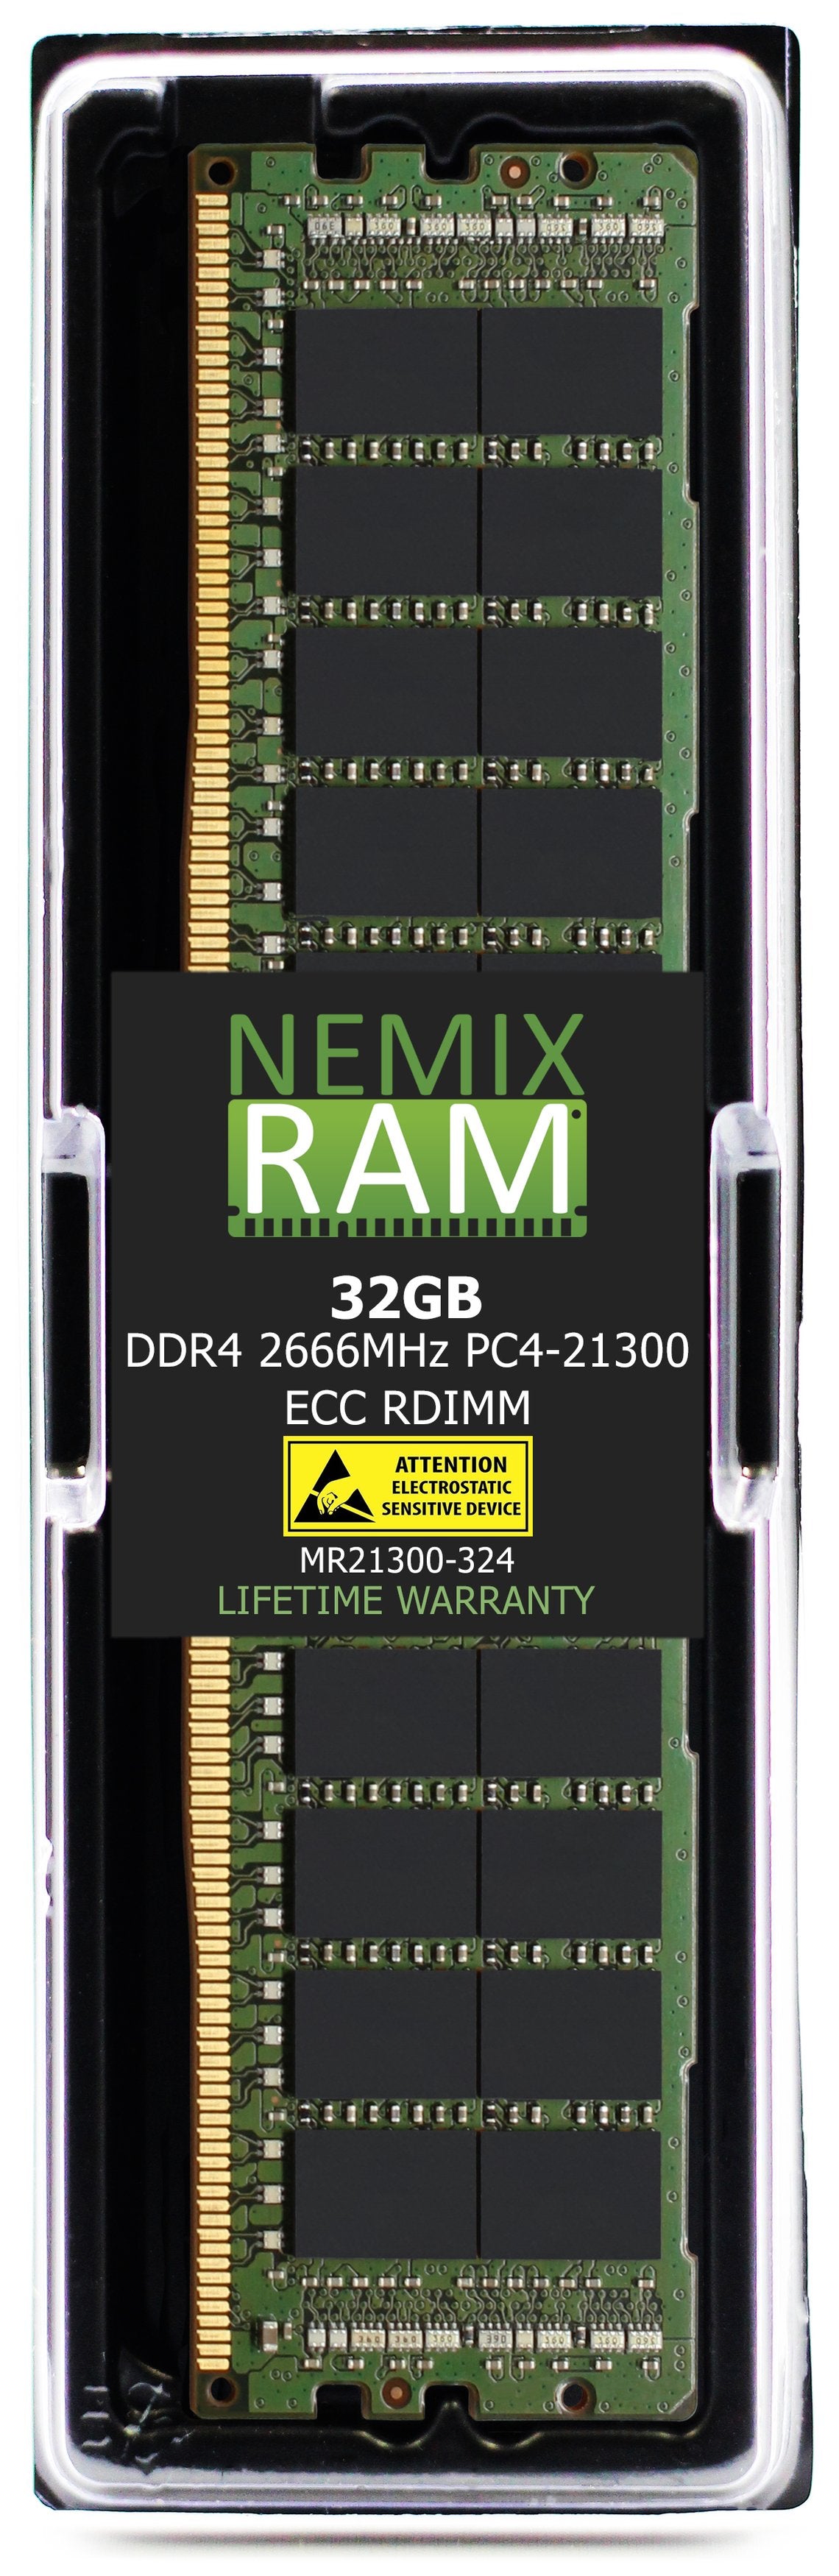 NEC Express5800 T120h Memory Module N8102-711 32GB DDR4 2666MHZ PC4-21300 RDIMM